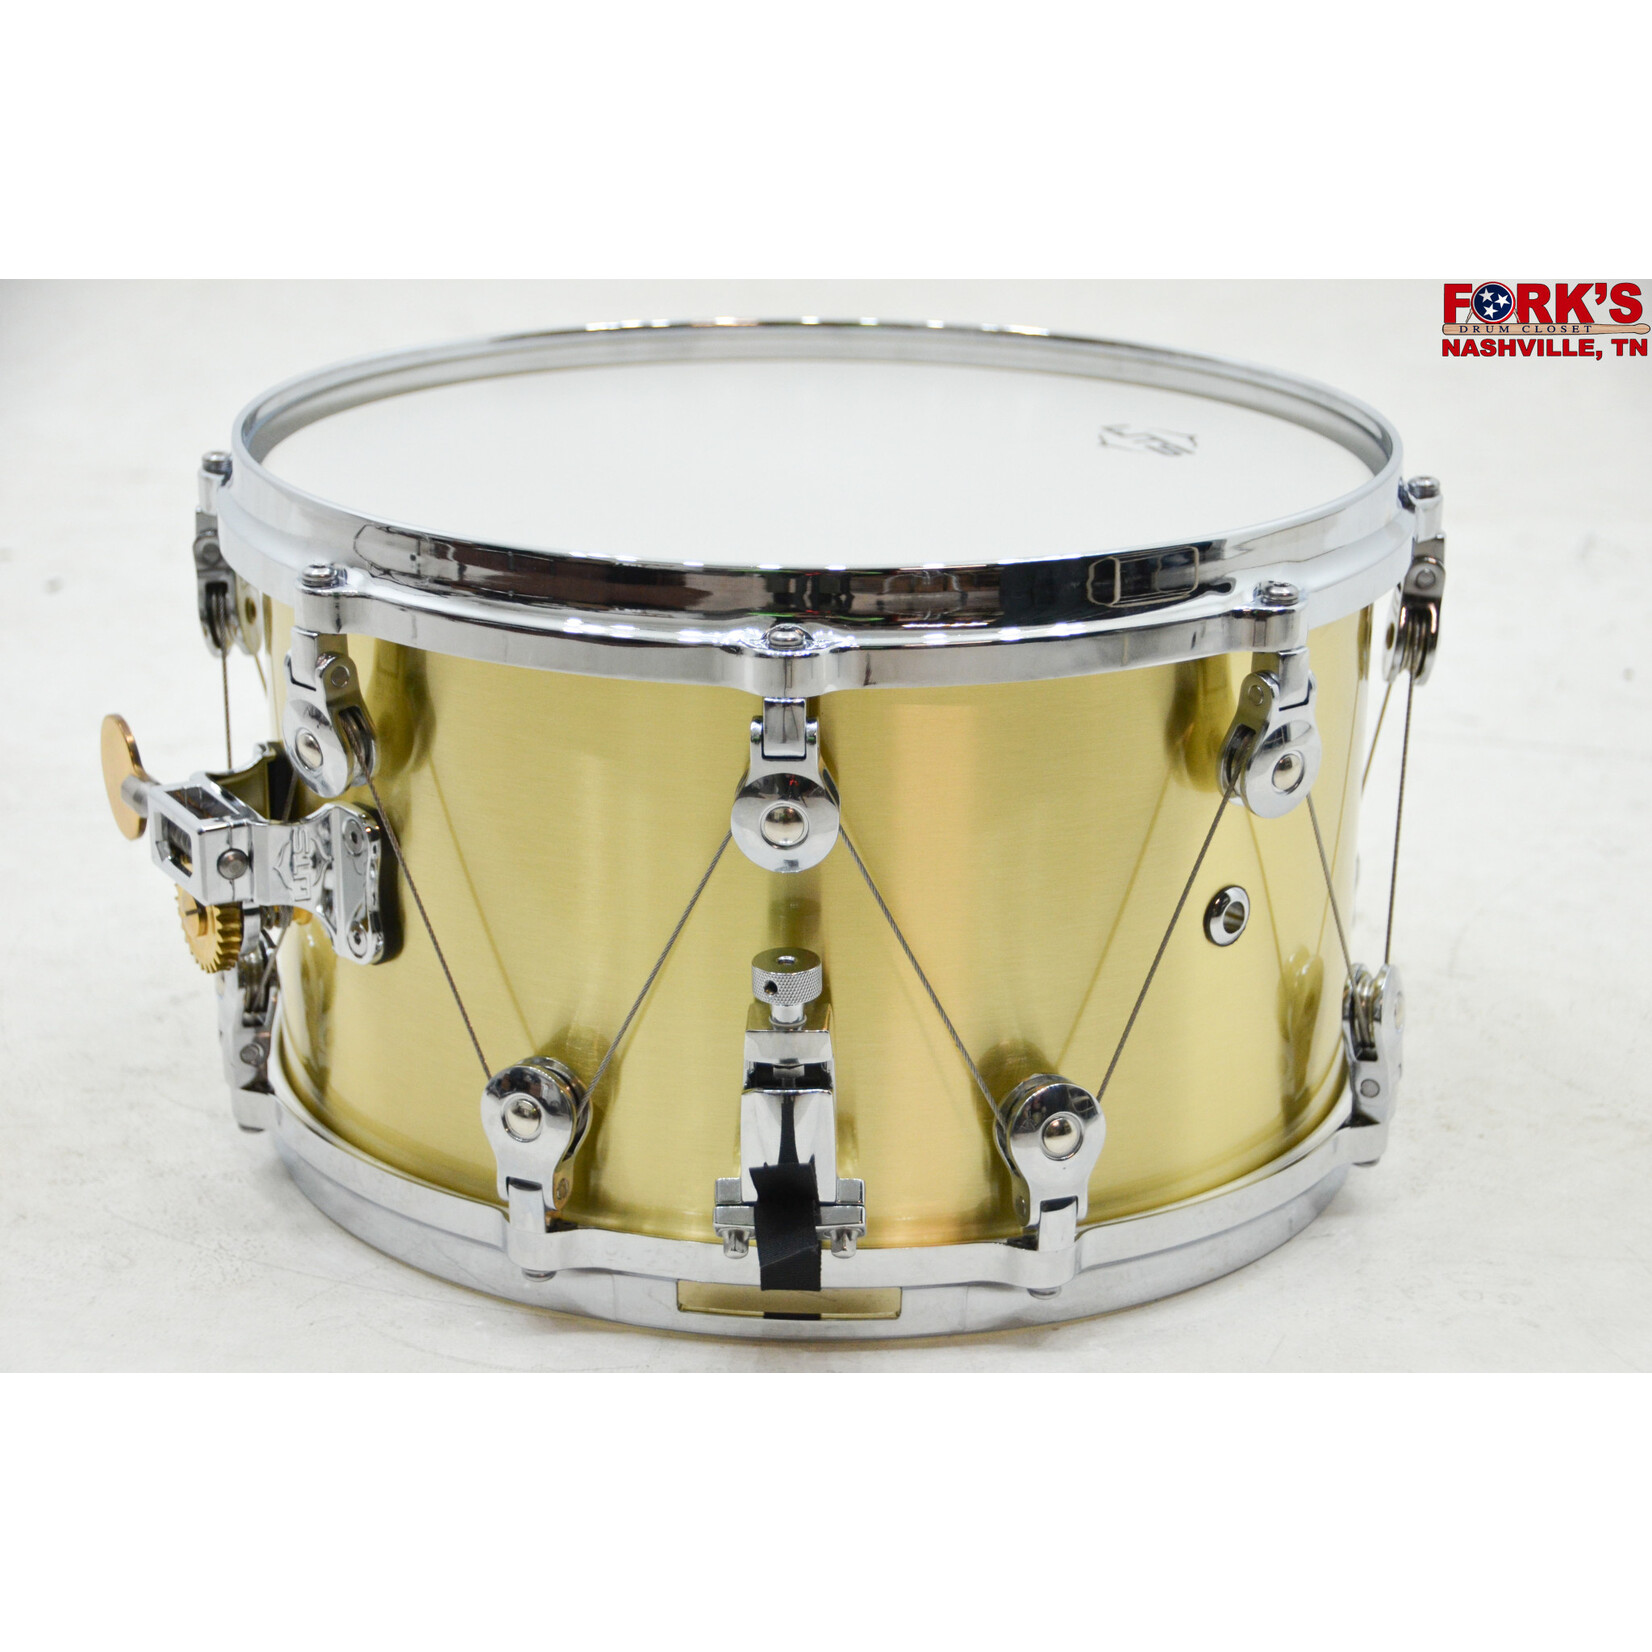 WTS WTS Steve Pruitt Signature Series 7.5 x 13 Brass Snare Drum